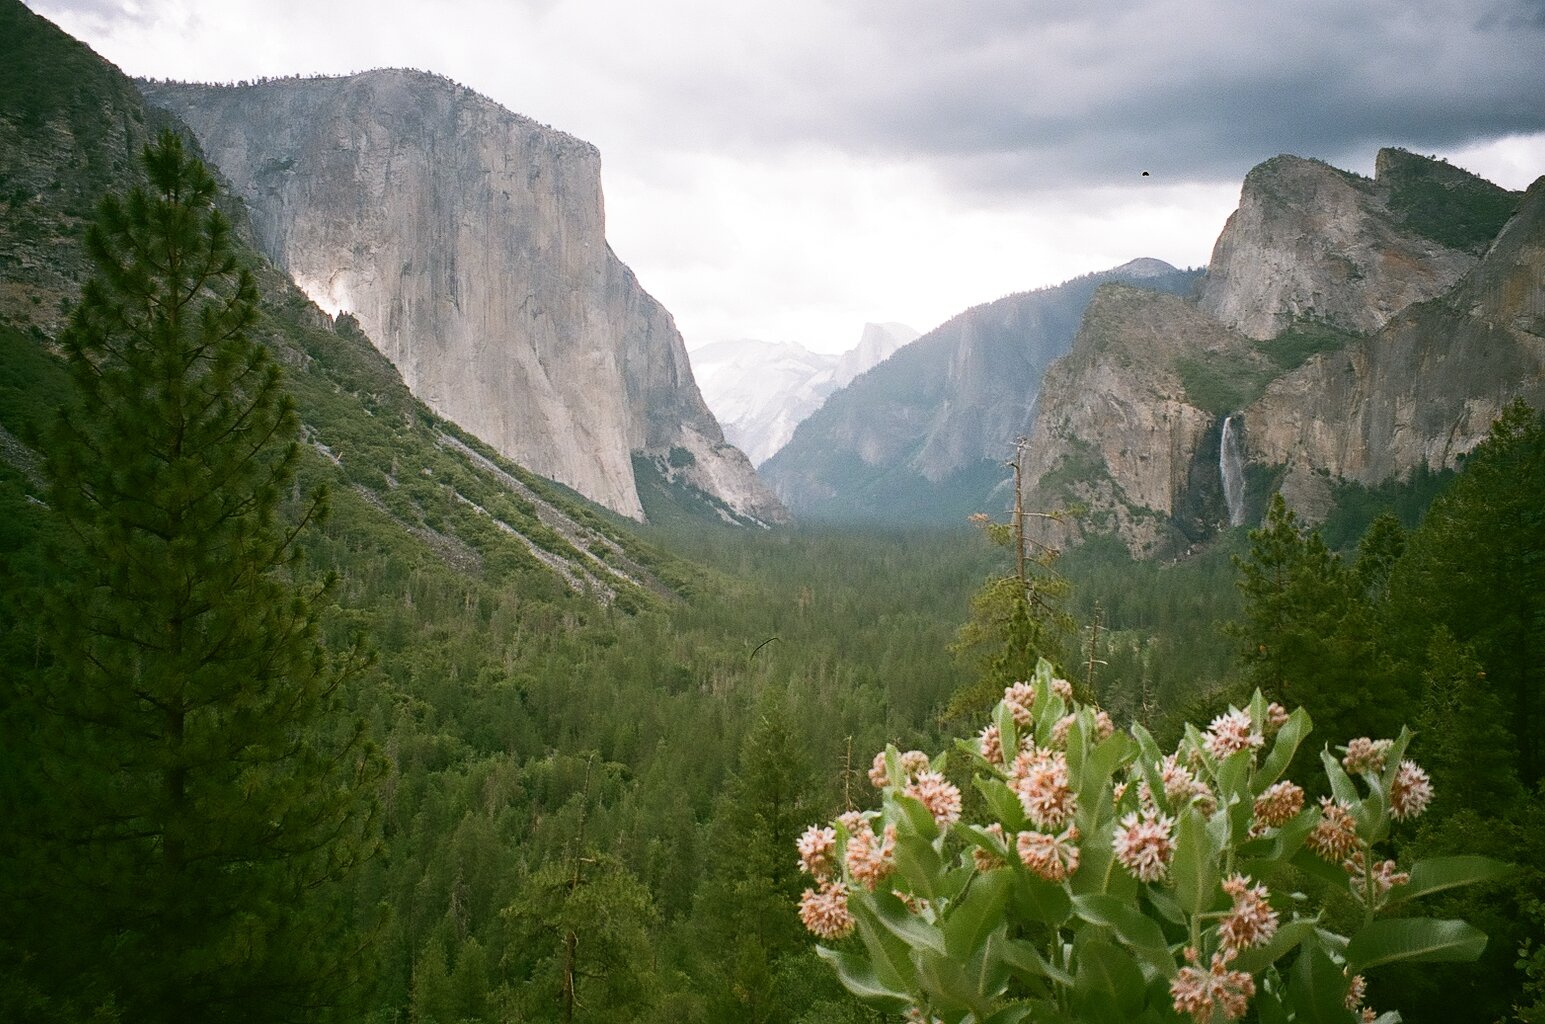  Yosemite National Park, California. 2021. 